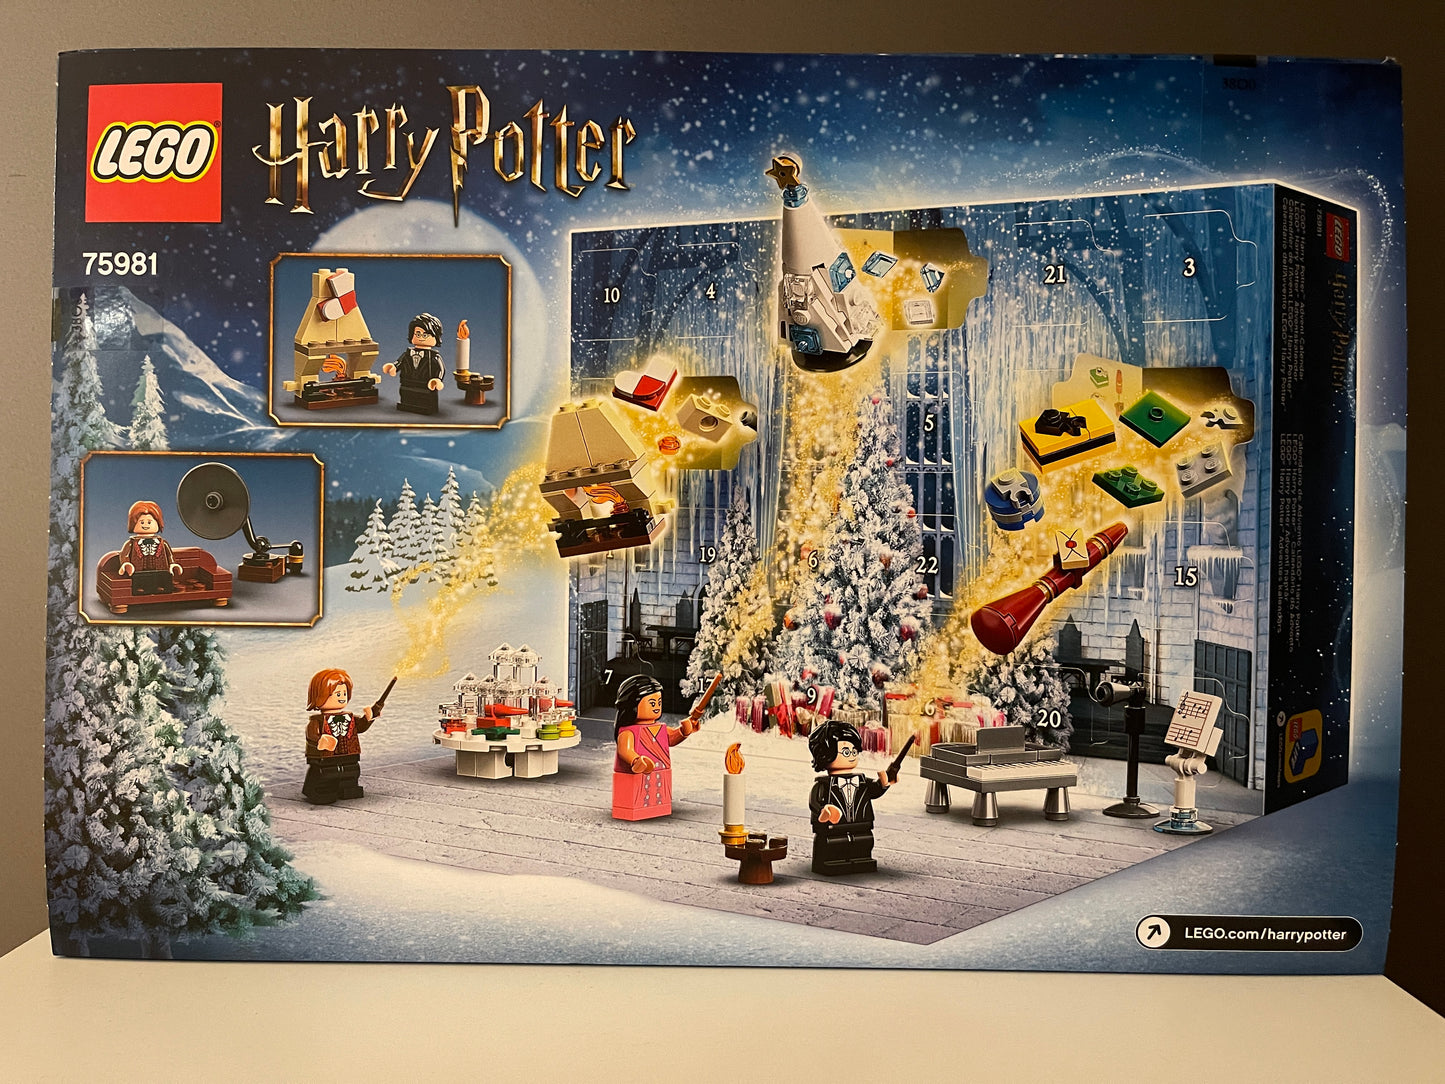 LEGO Harry Potter "Harry Potter Adventskalender" 24 Geschenke (75981) 2020